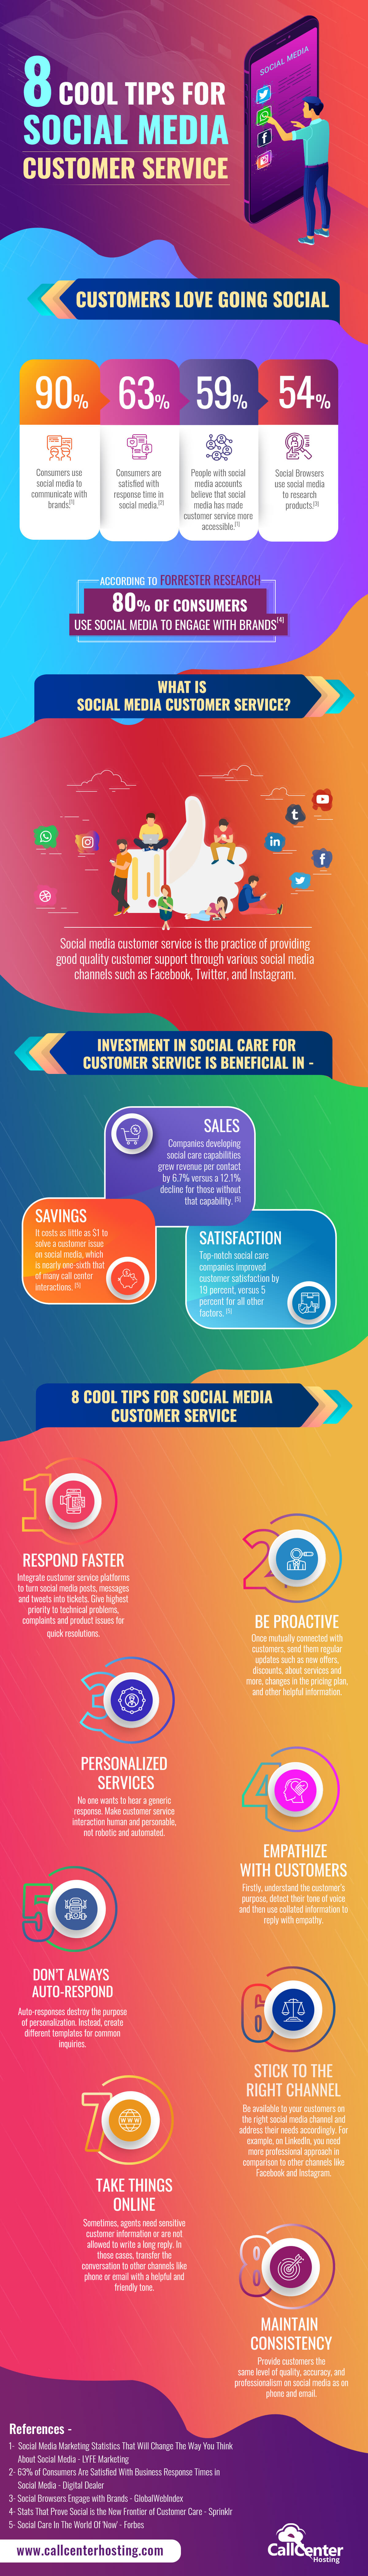 8 Cool Tips For Social Media Customer Service